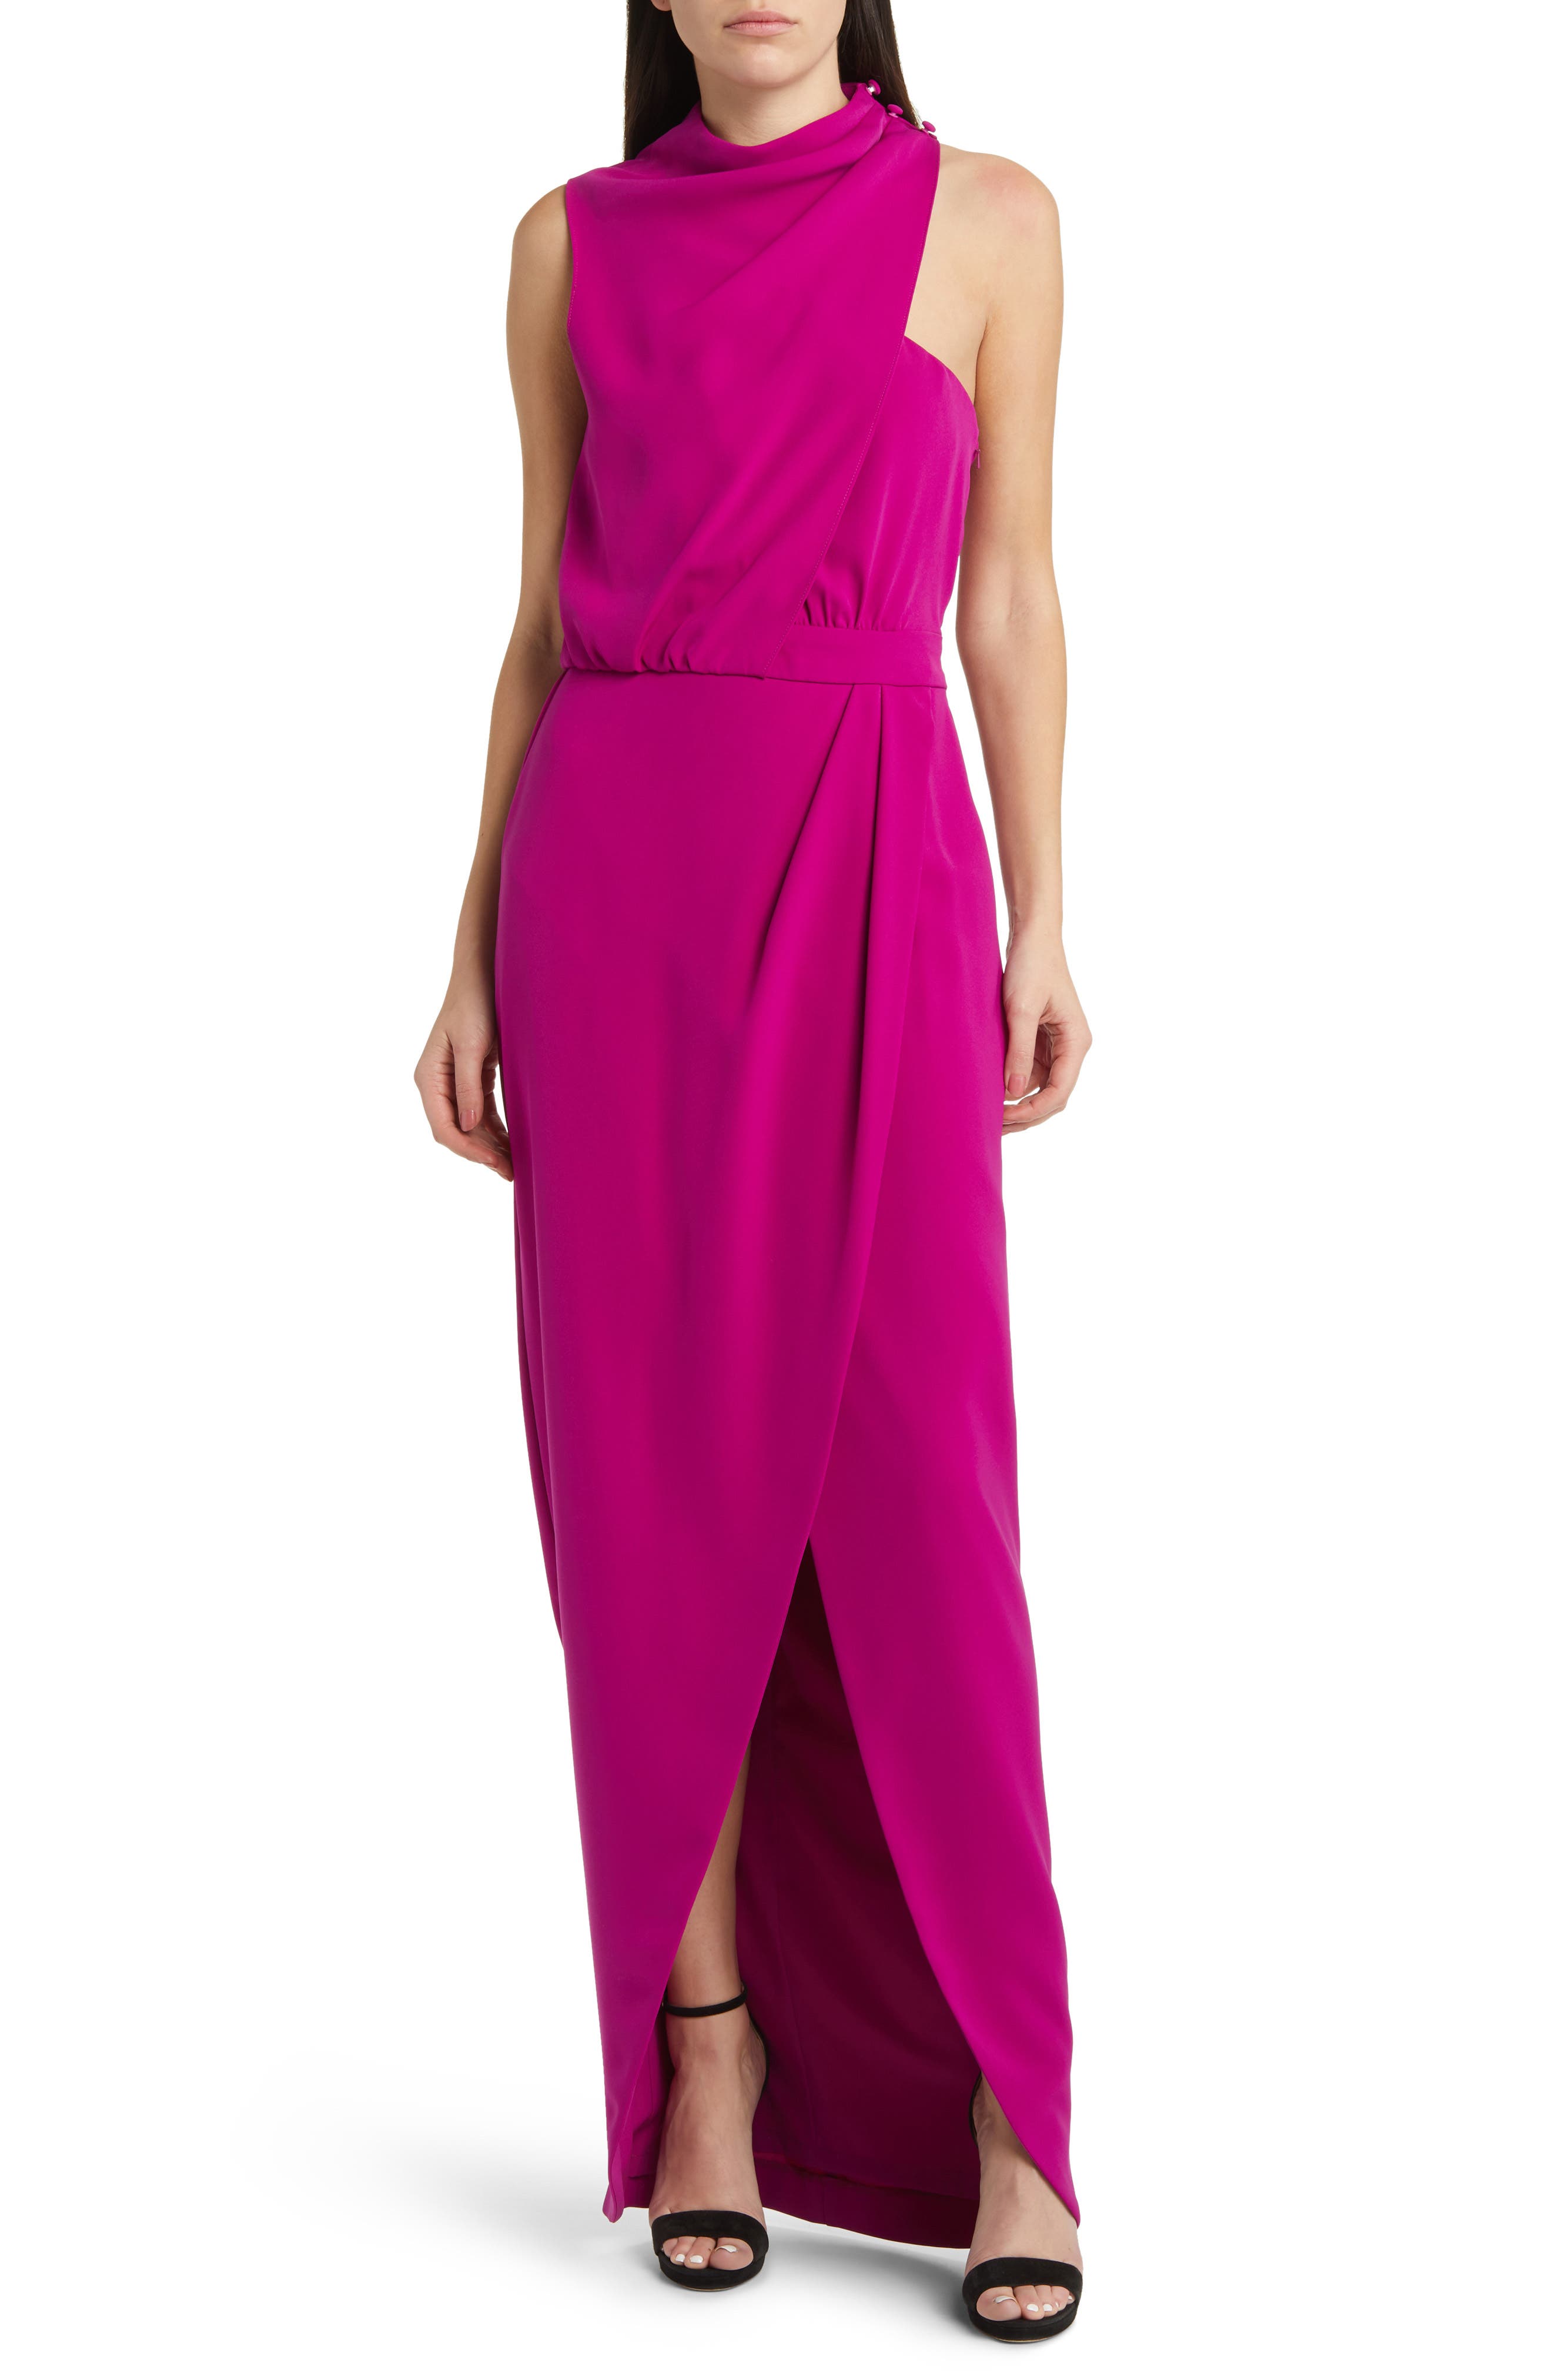 Burberry rose-print silk gown - Purple